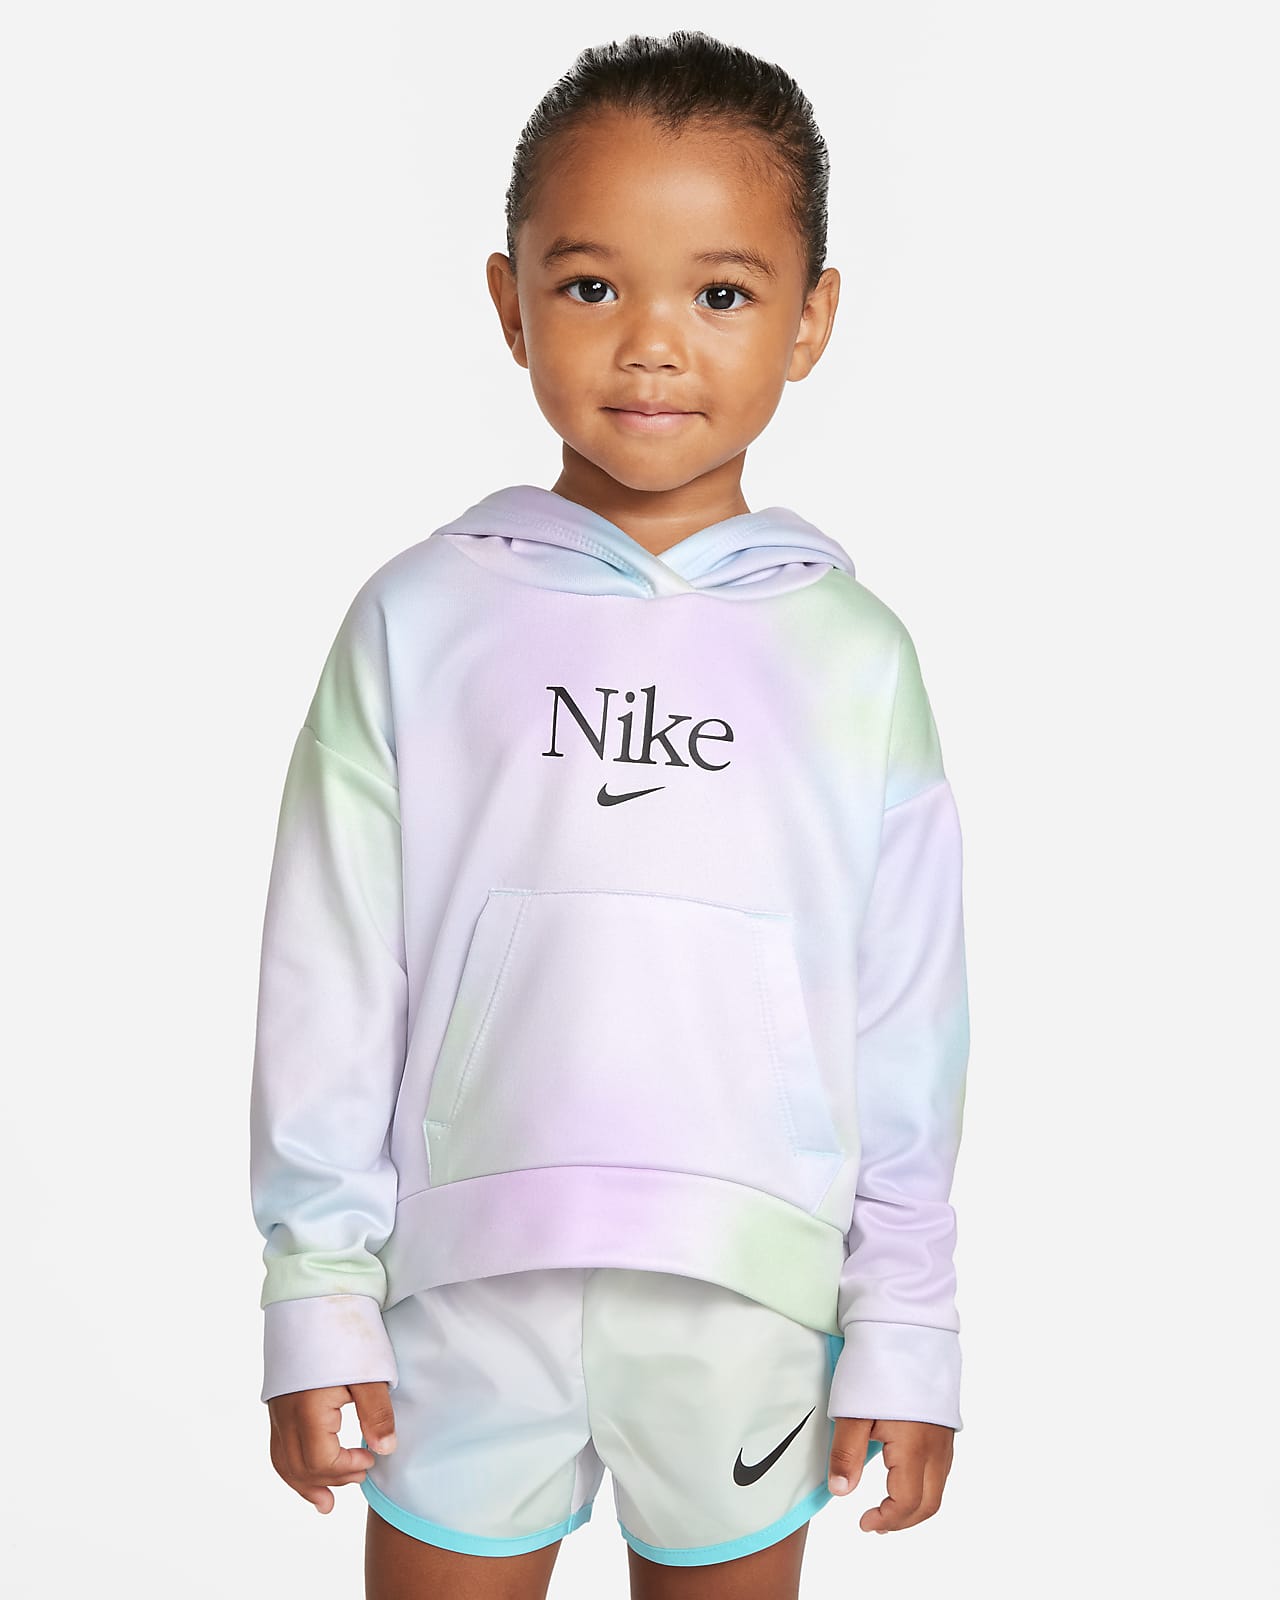 Nike Toddler Pullover Nike.com